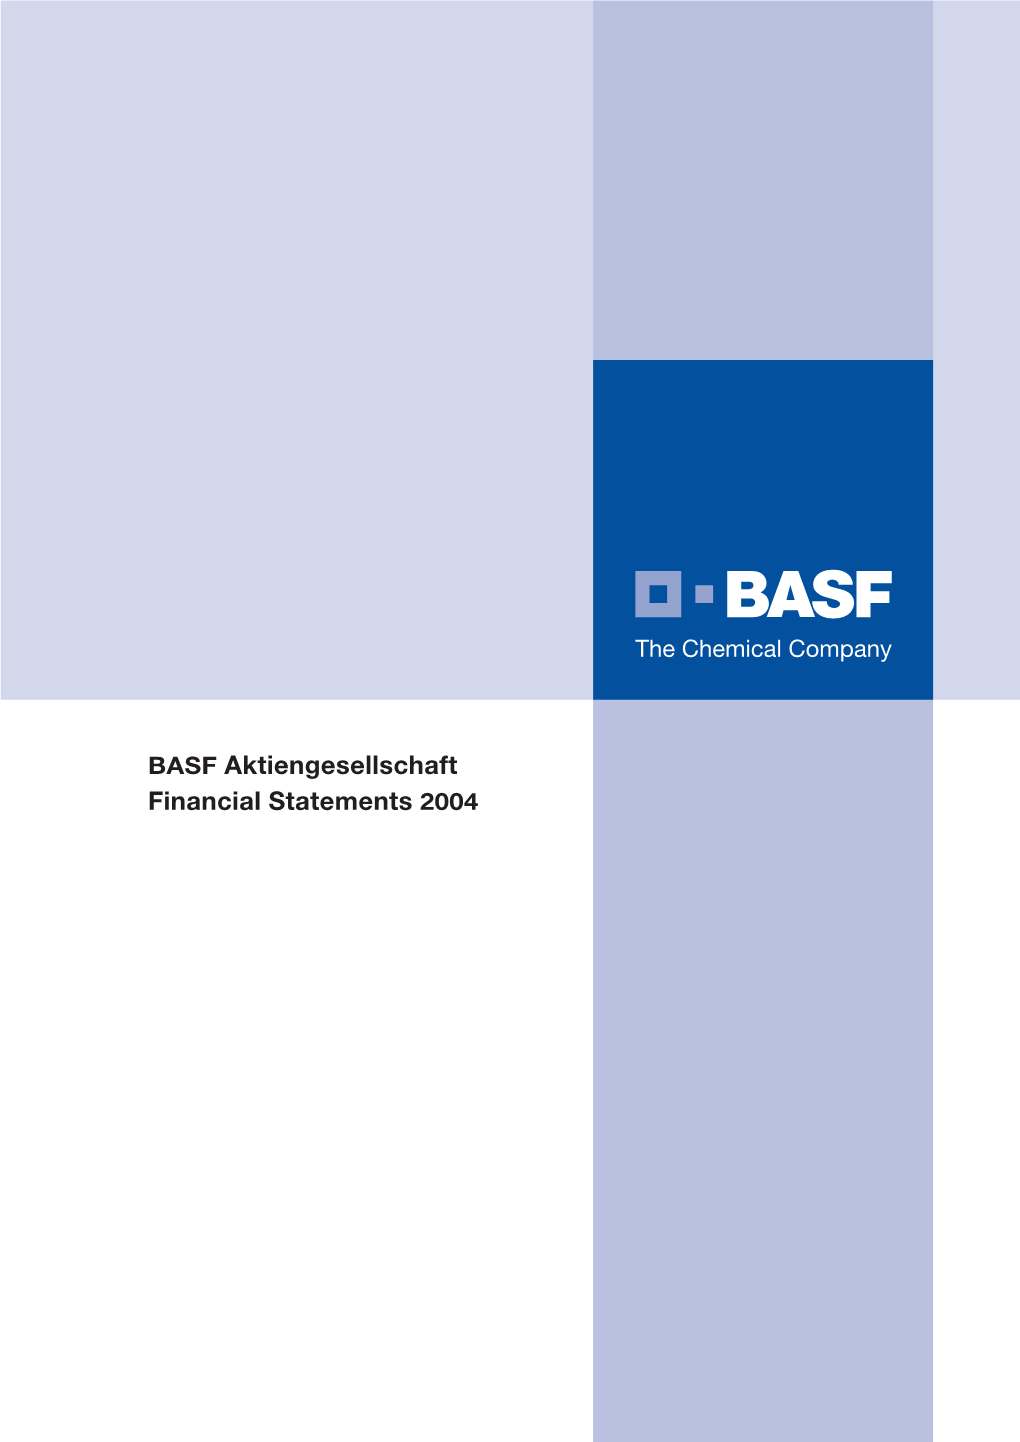 BASF AG Financial Statements 2004